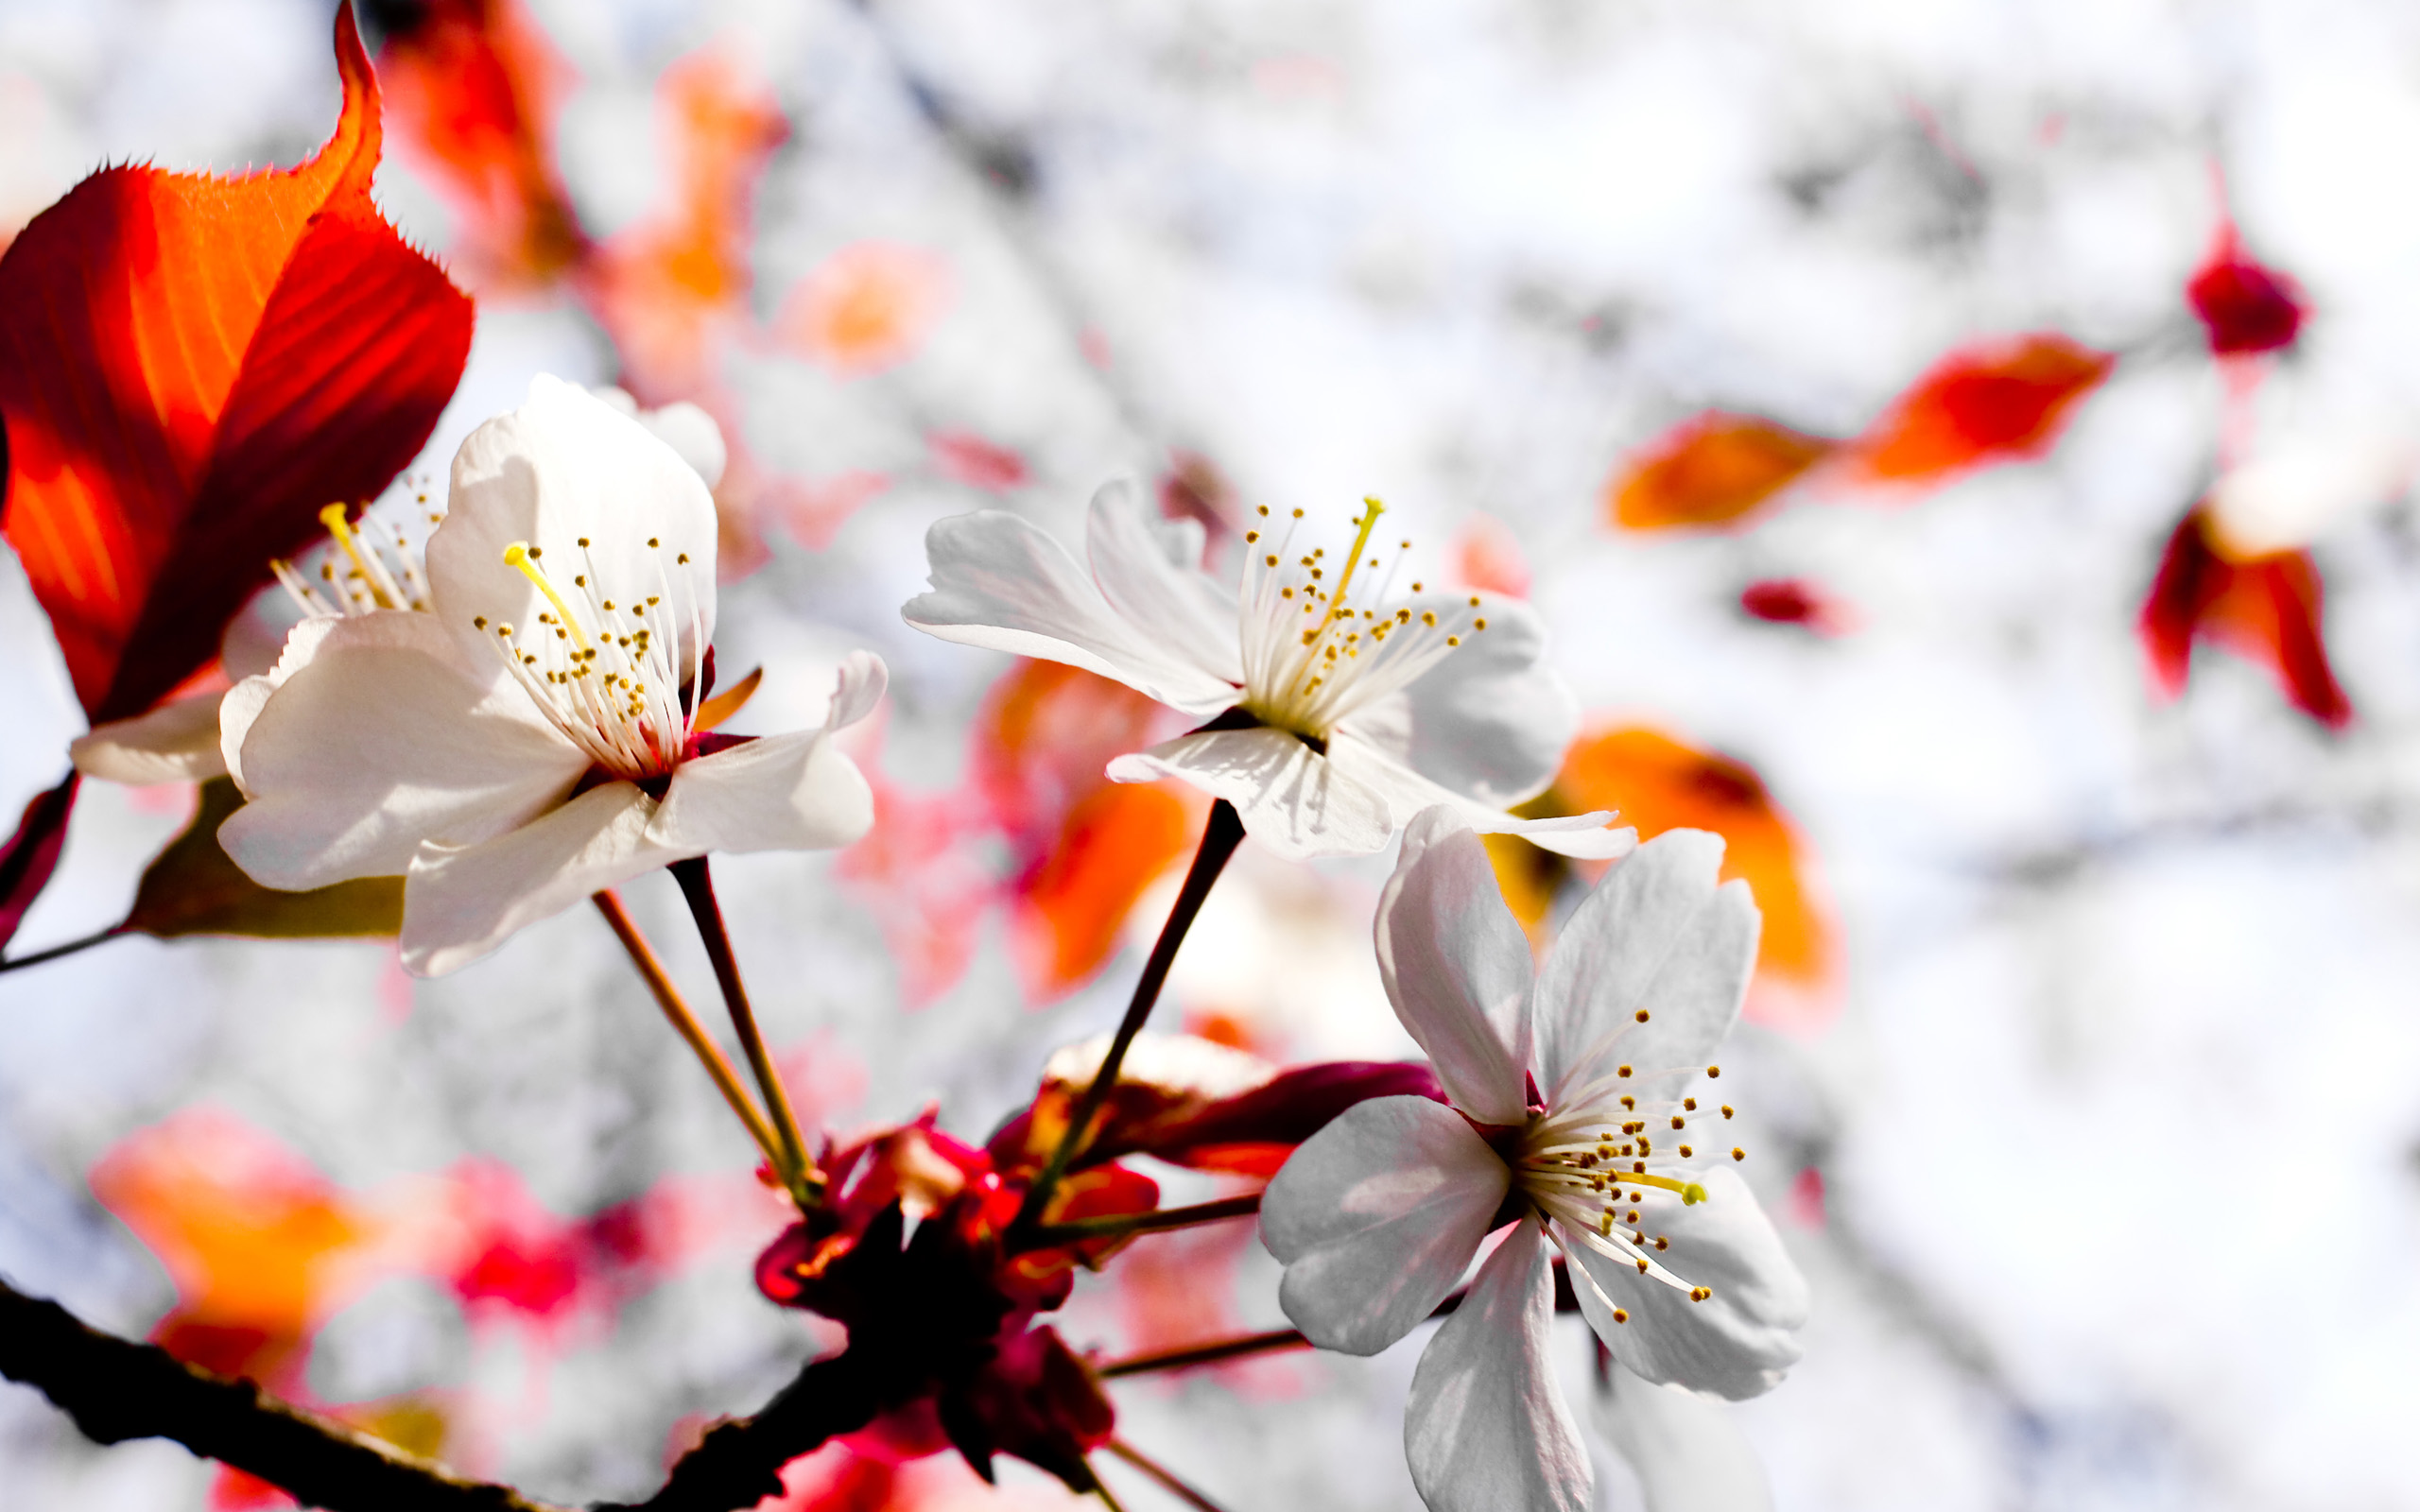 Wallpapers flower cherry sakura on the desktop